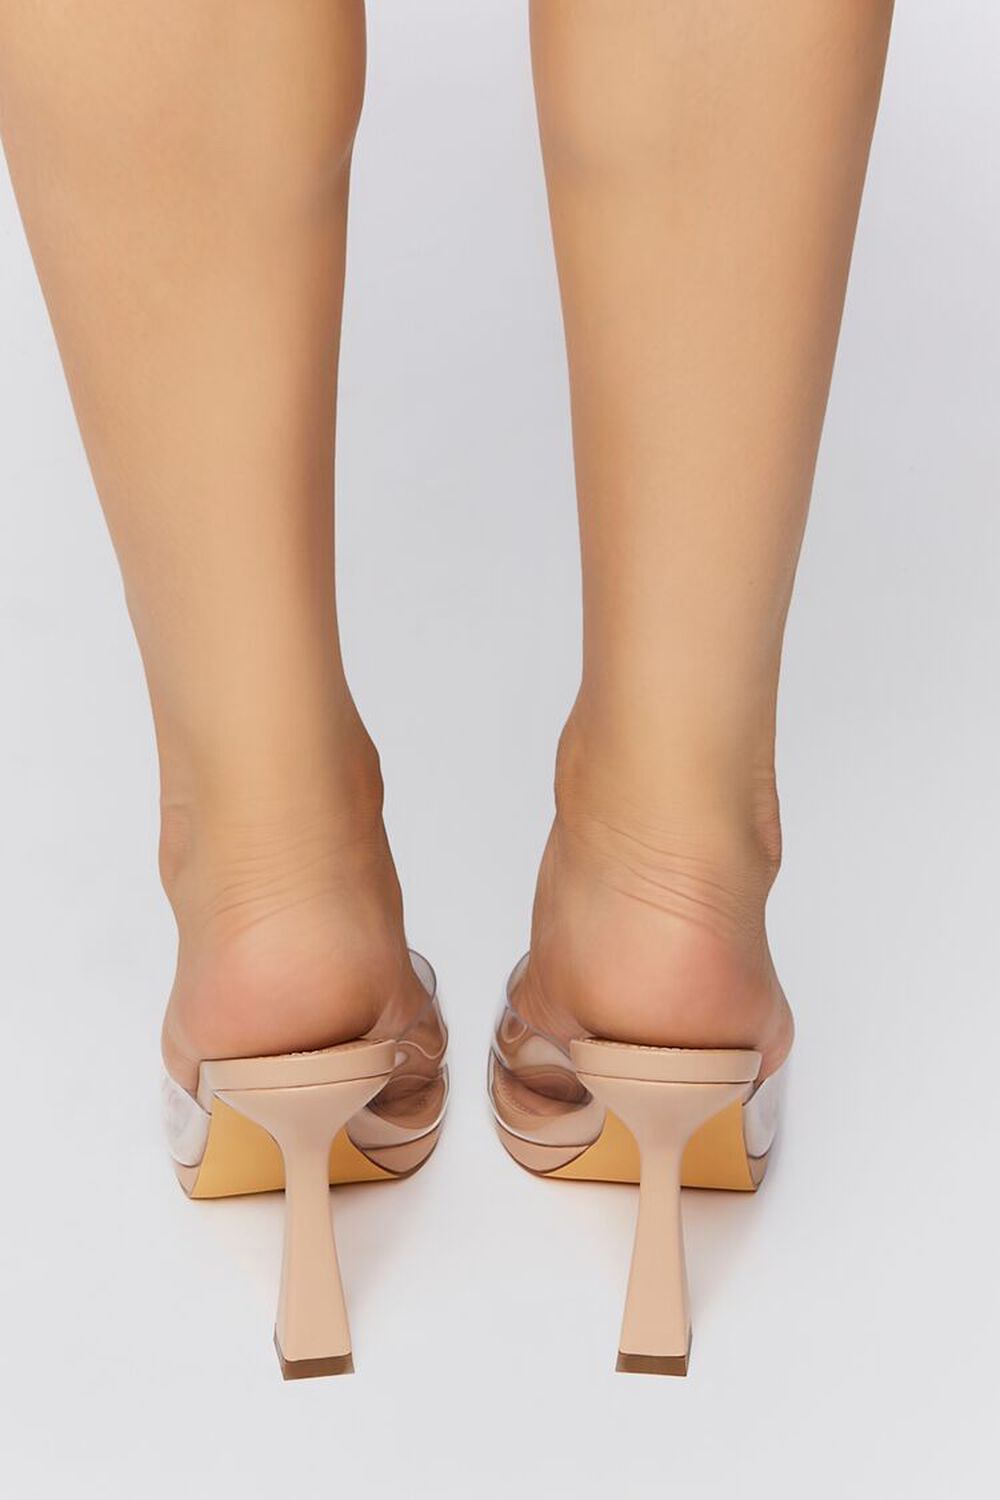 NUDE Open-Toe Stiletto Heels, image 3